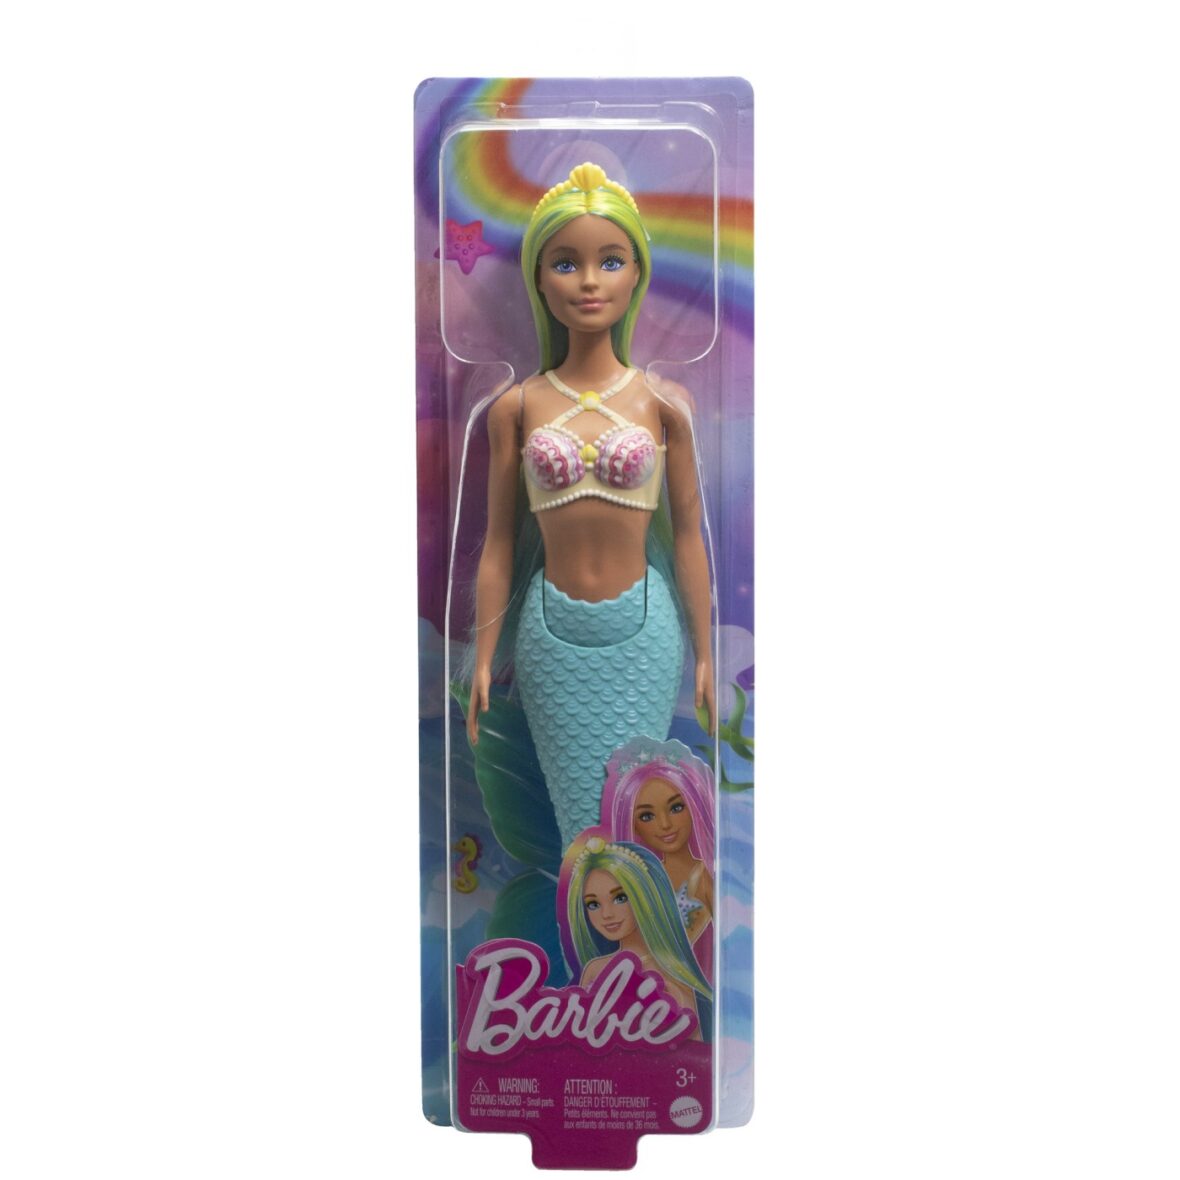 Barbie Dreamtropia Papusa Sirena Cu Corest Galben Si Coada Albastra